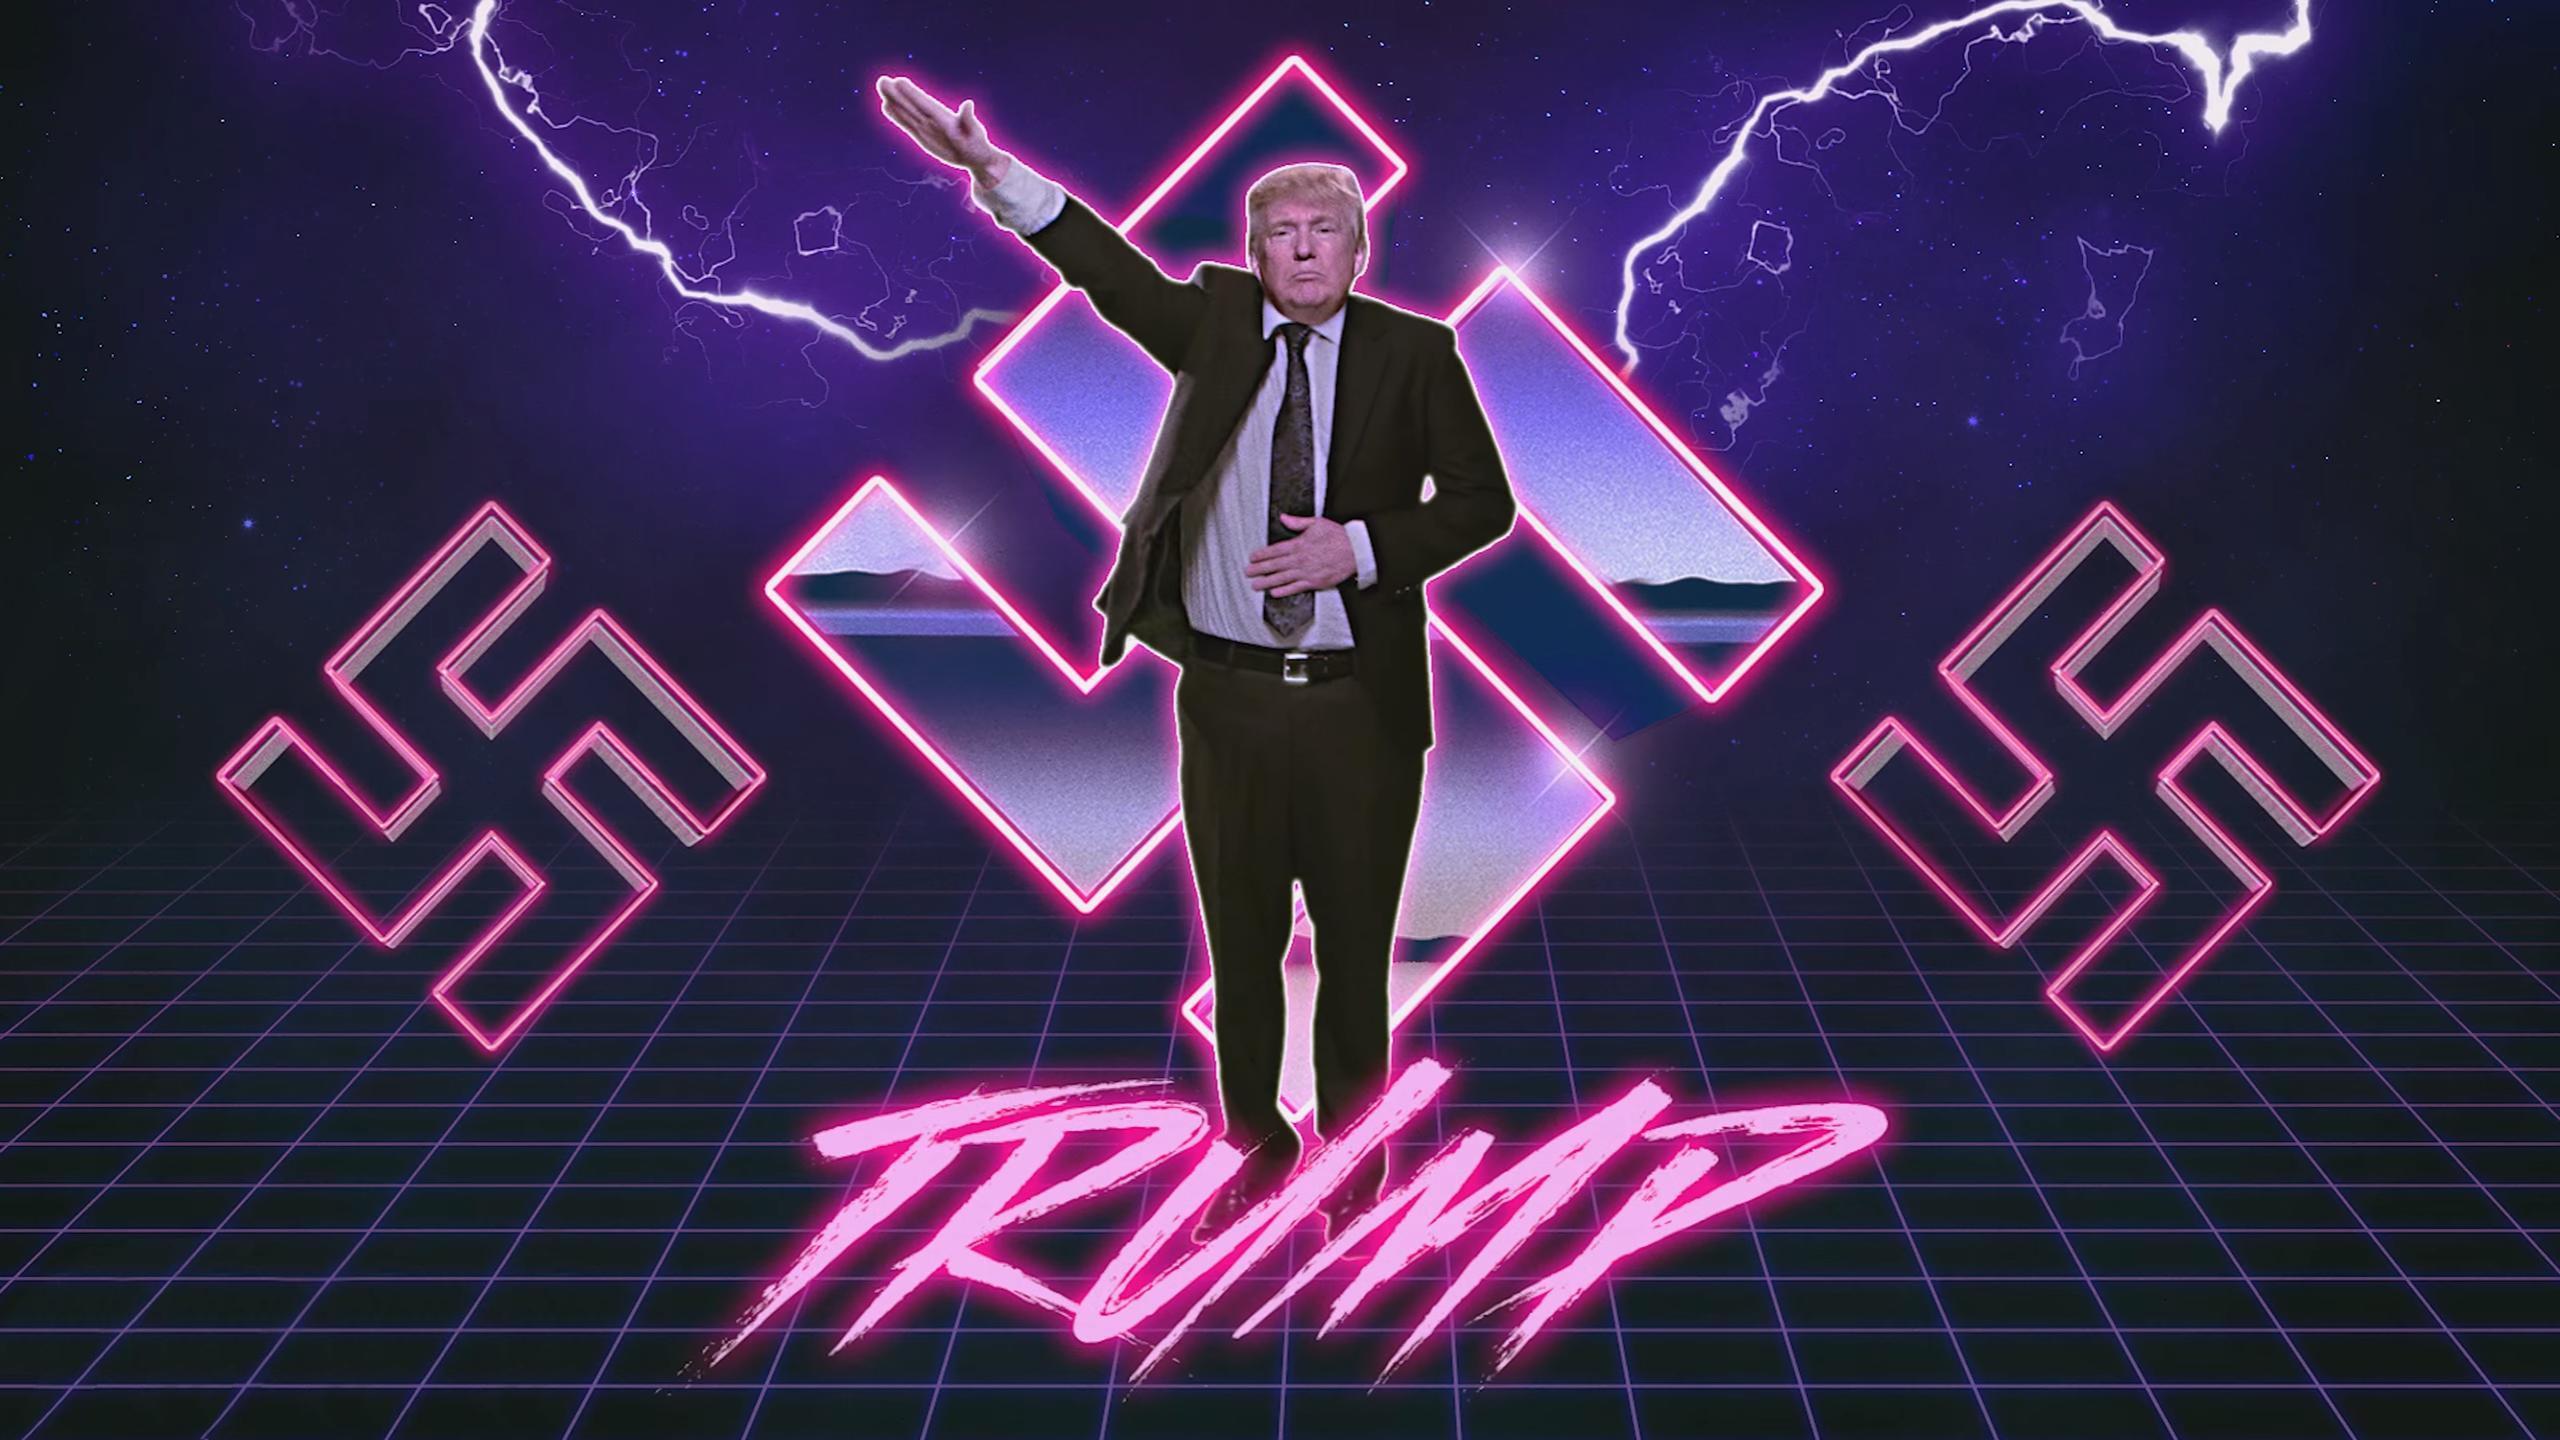 Trump wallpaper in 1440p from Mike Divas